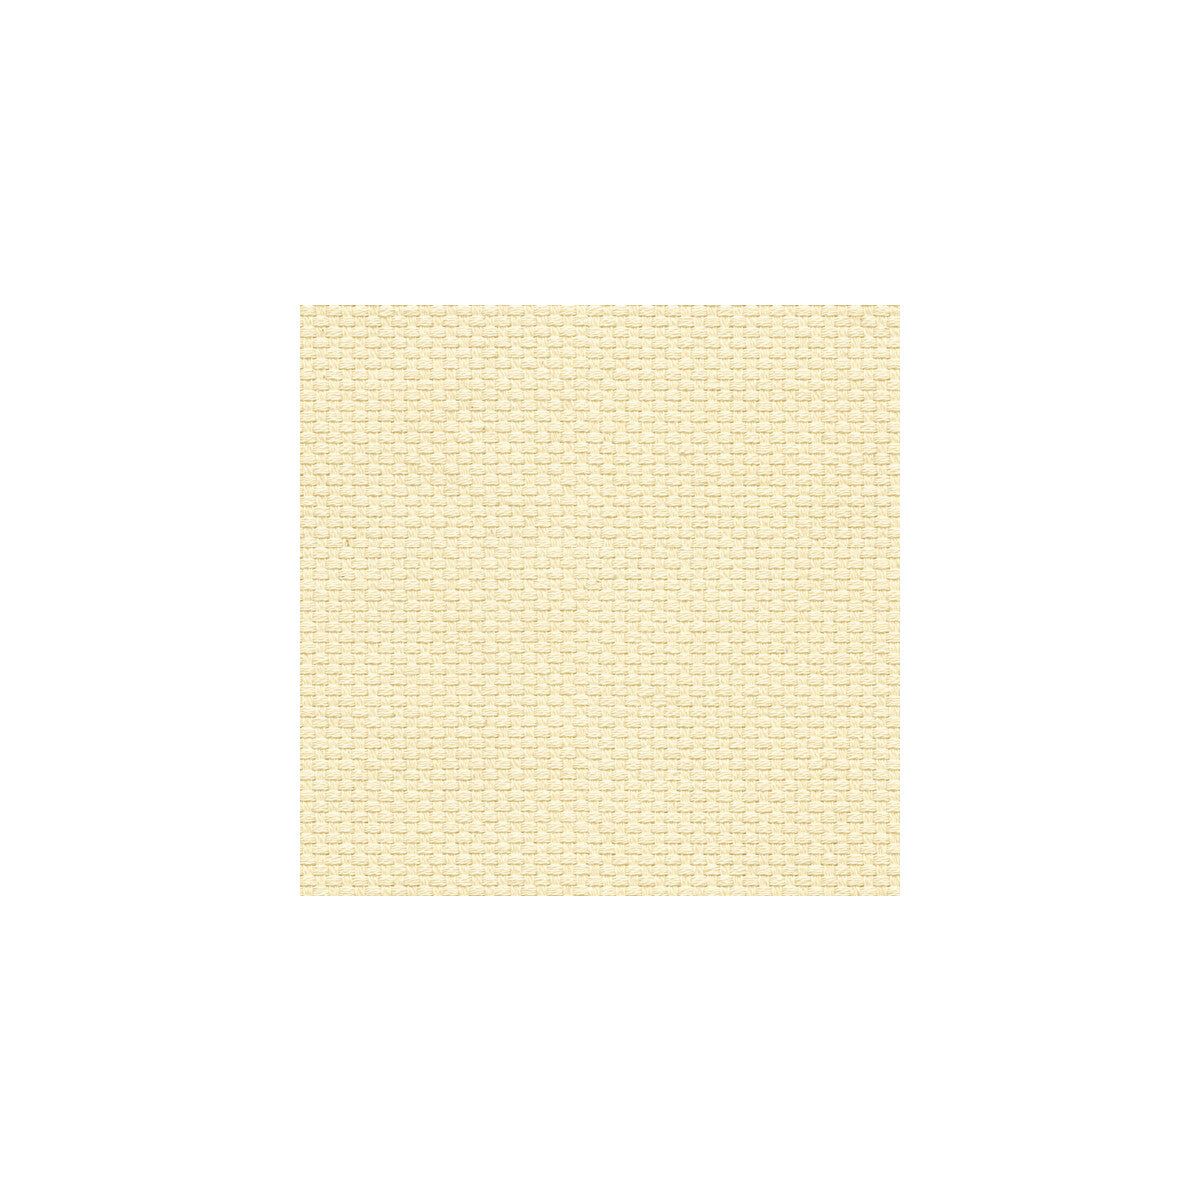 Kravet Smart fabric in 32971-1 color - pattern 32971.1.0 - by Kravet Smart